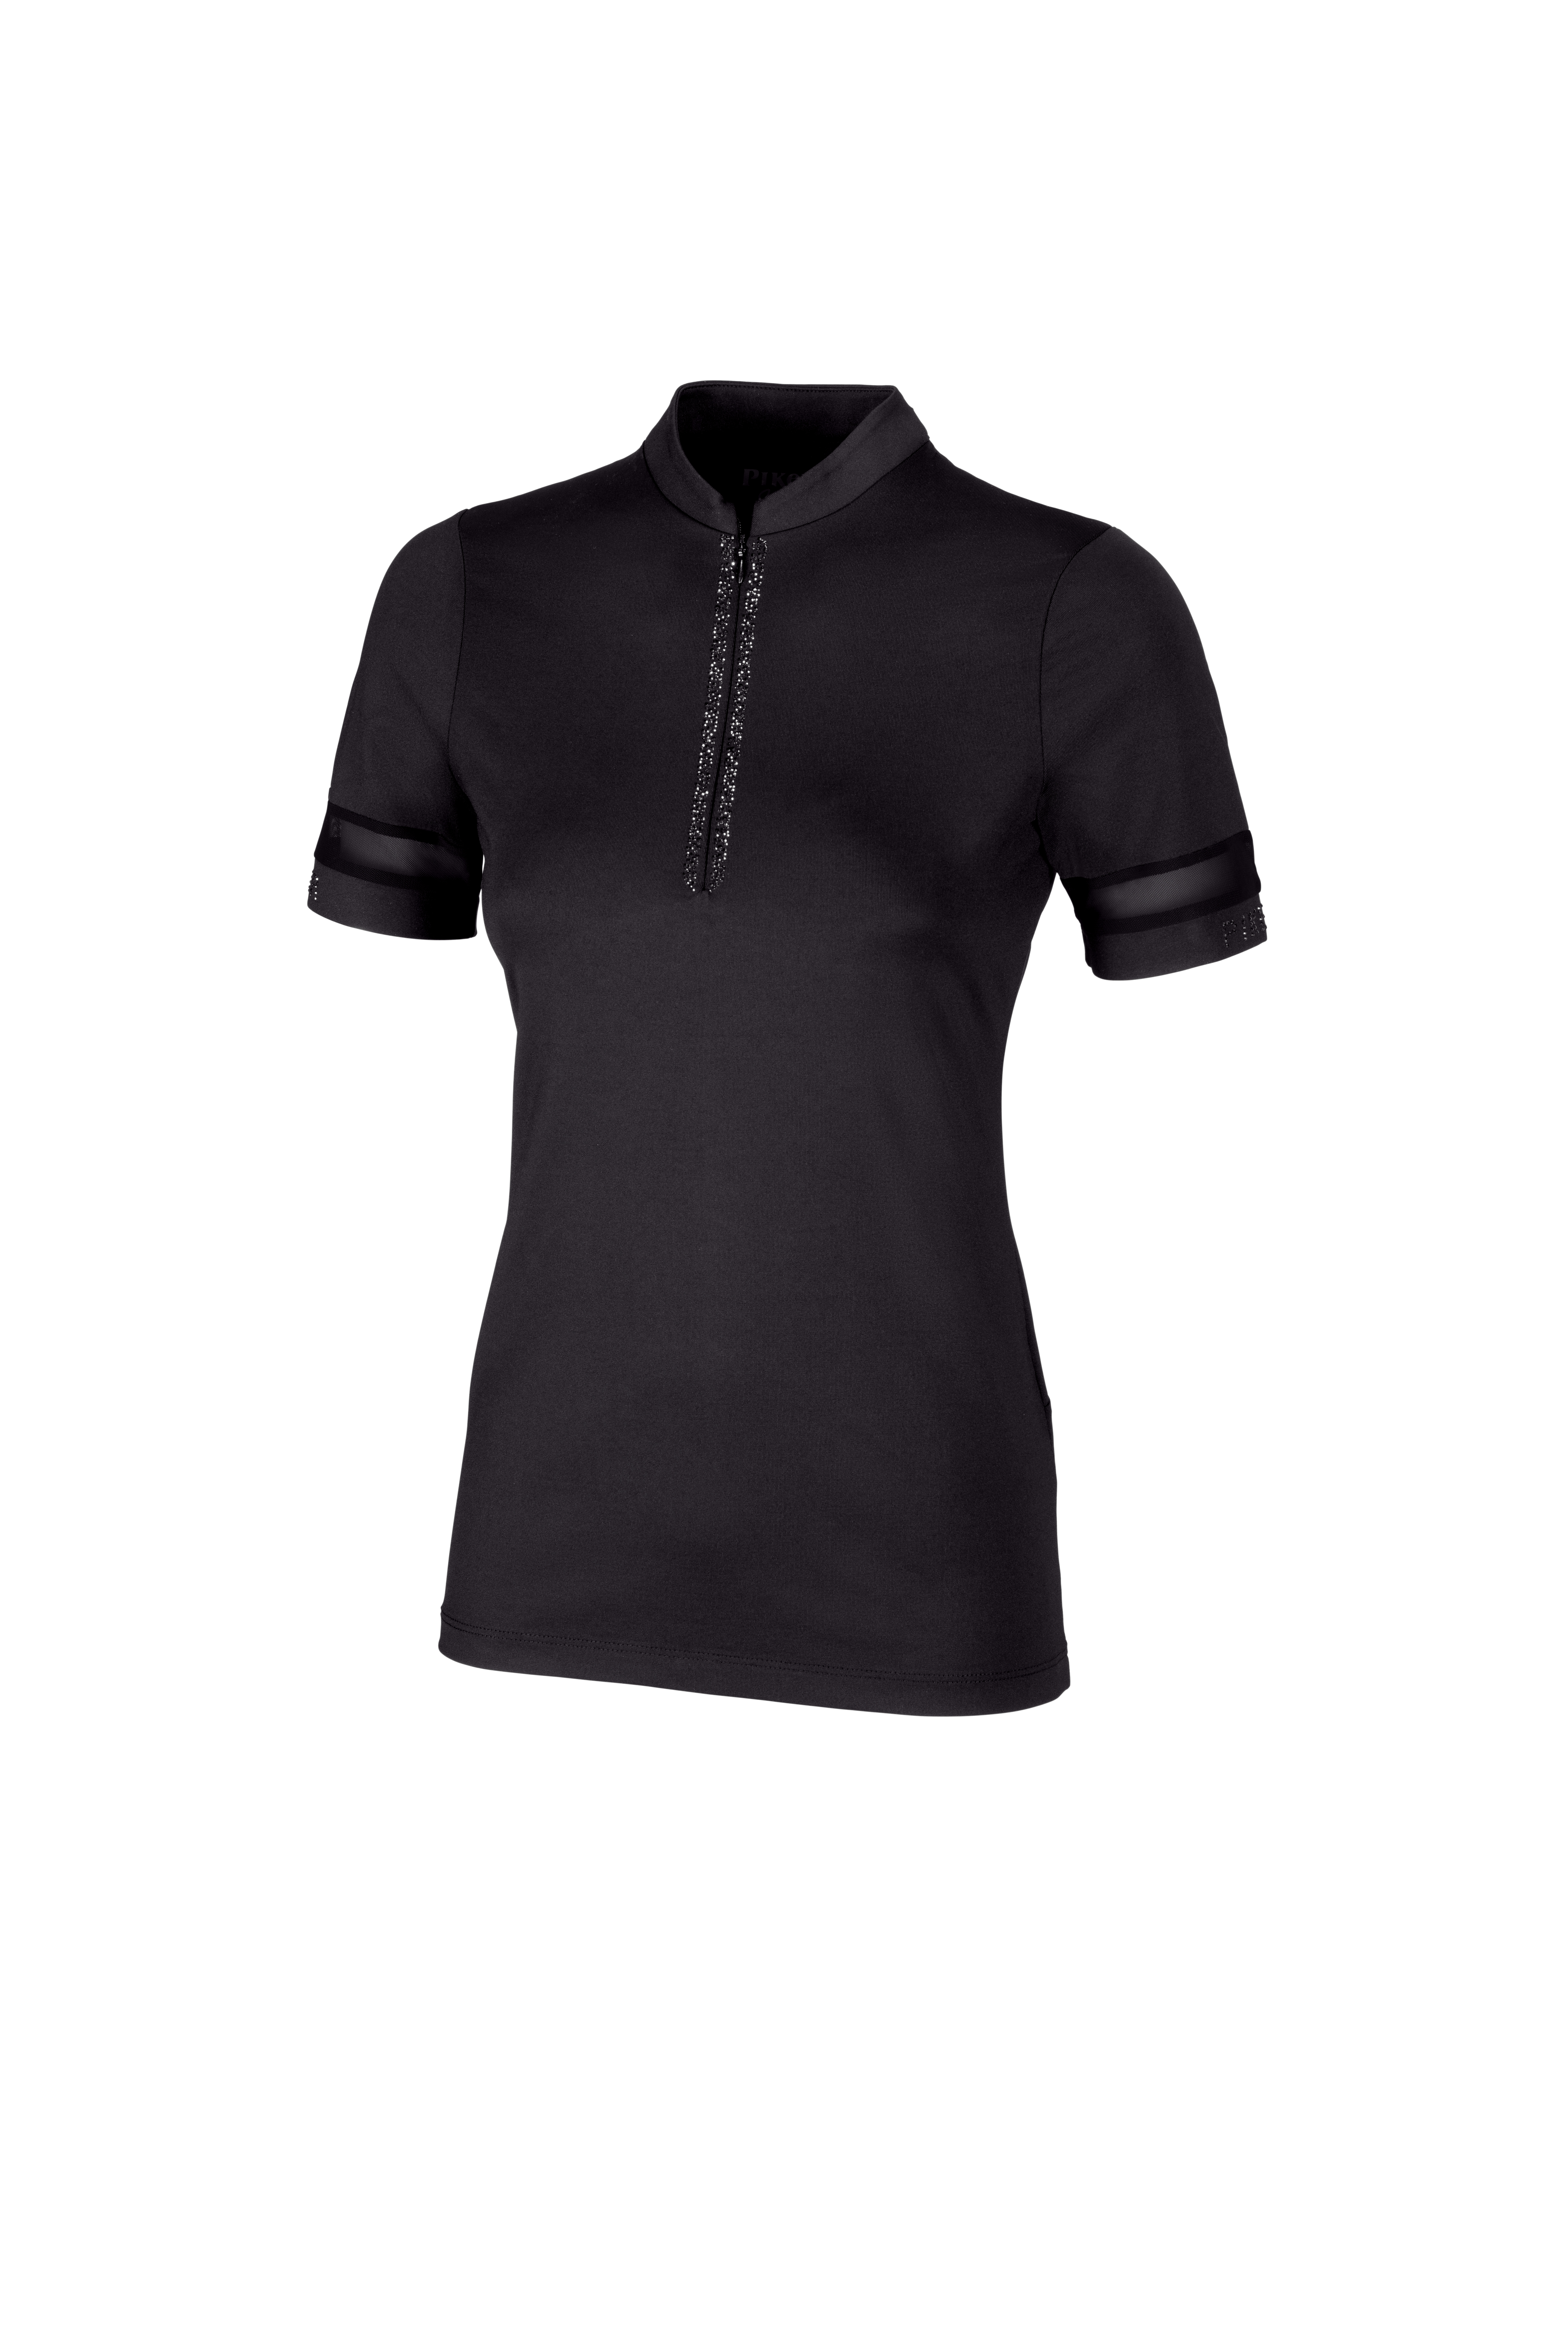 Pikeur FS24 Damen Zip Shirt 5210 Selection